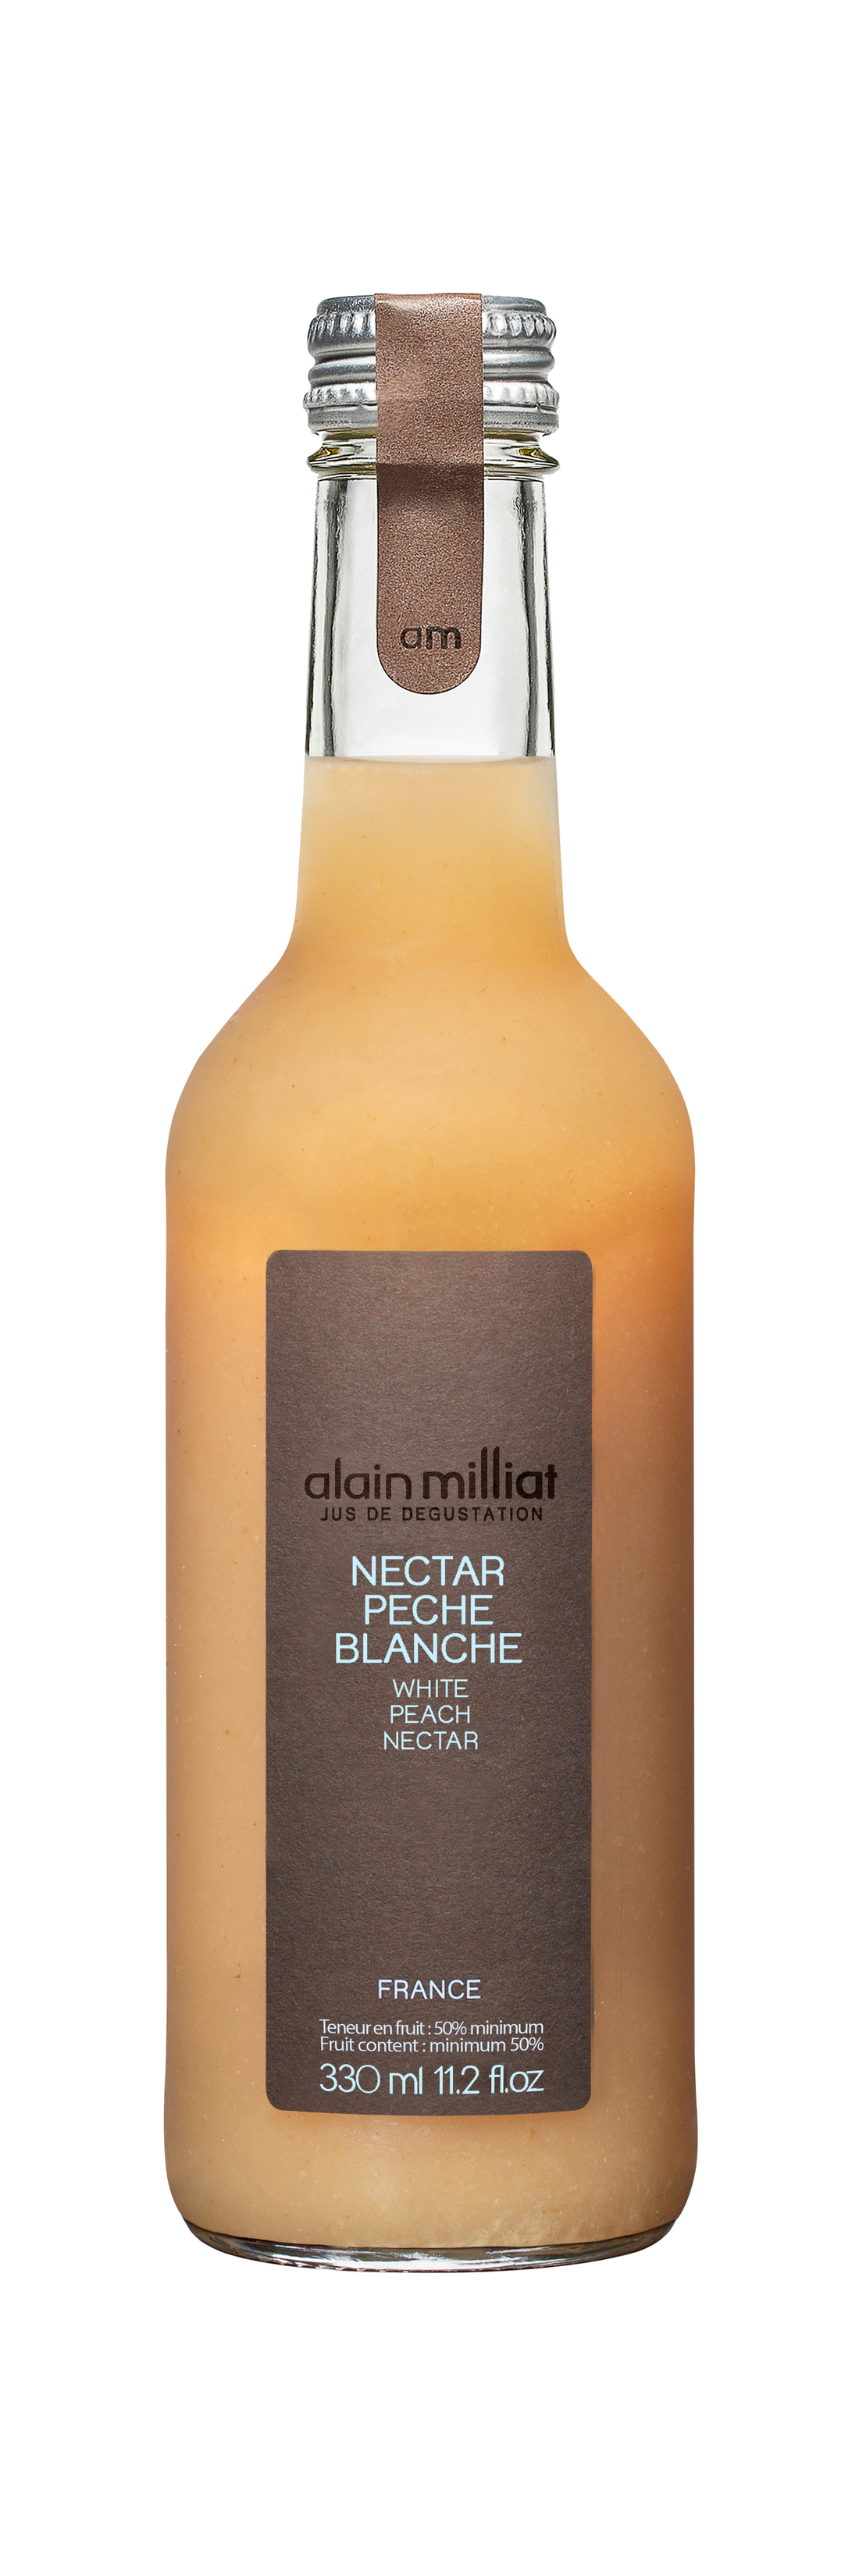 Alain Milliat White Peach Nectar